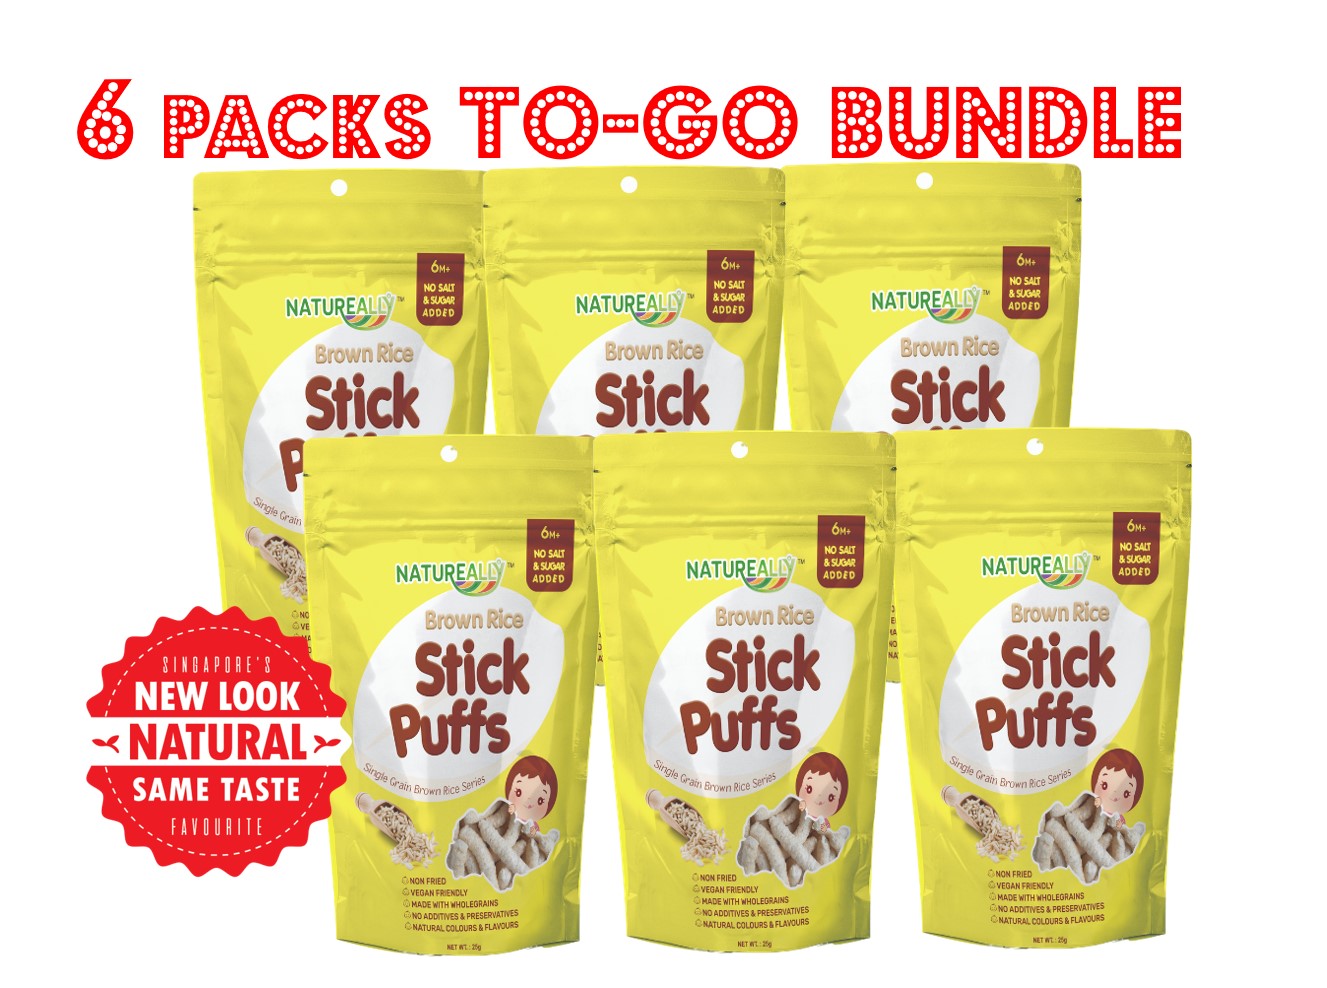 Value Pack Of 6x25G NATUREALLY Original Brown Rice STICK Puffs (No Sugar, Salt & Msg Added) - 6m+